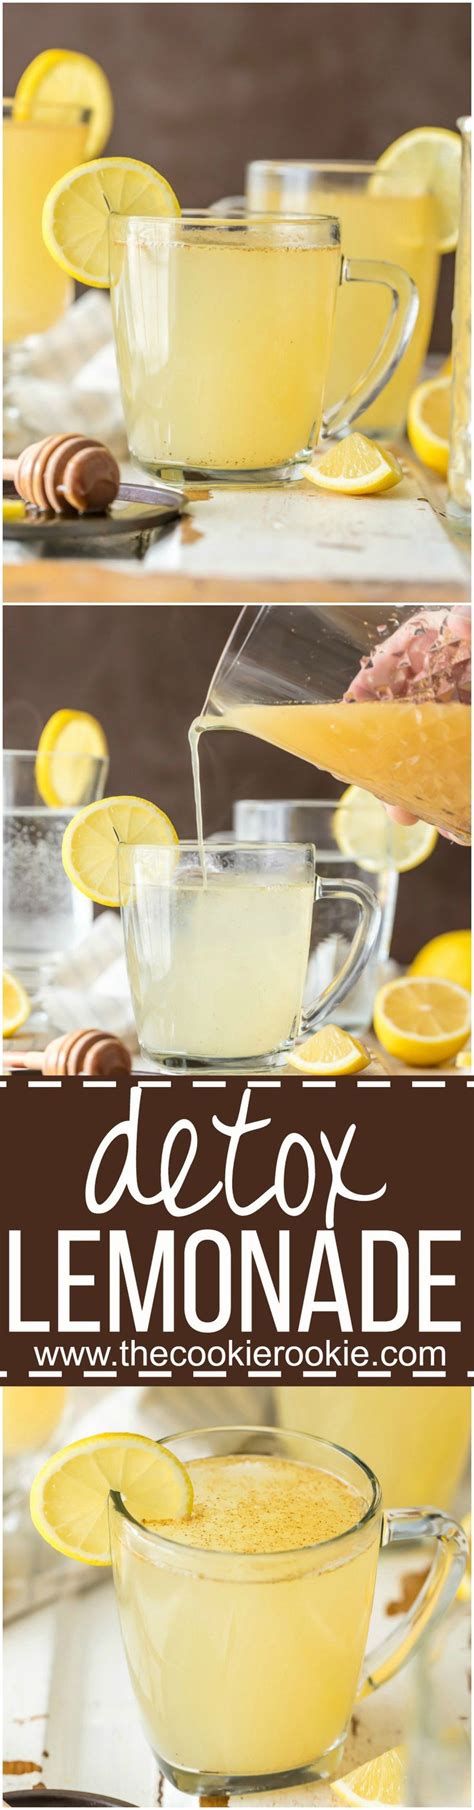 Homemade Detox Lemonade Cleanse Recipe Recipe Box Drinks Detox